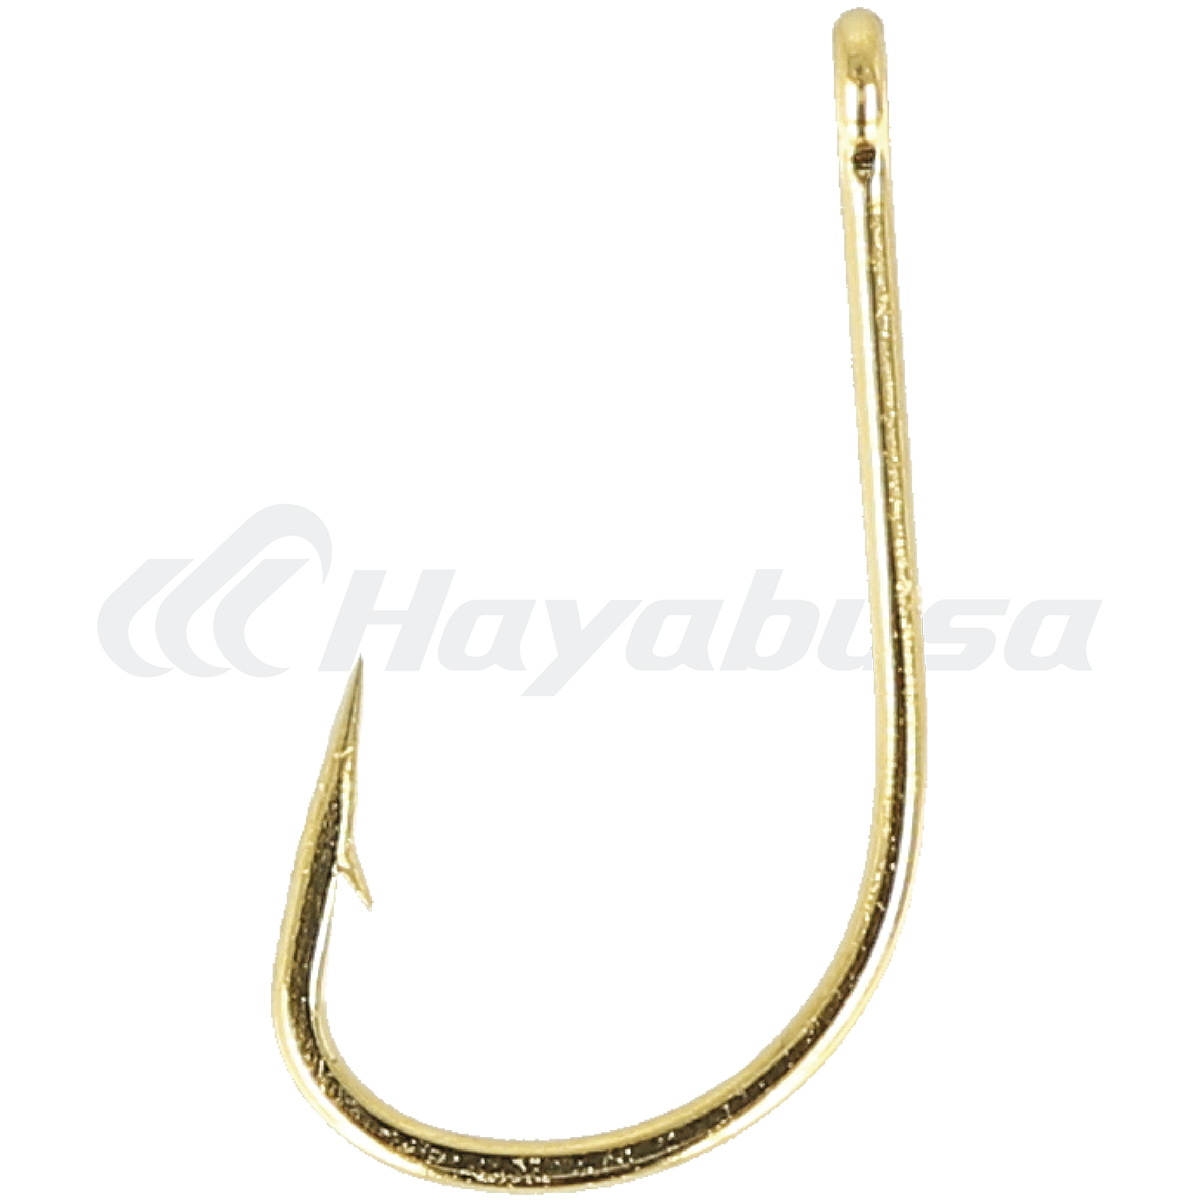 Крючок Hayabusa H.UMT209G №10 (10шт)